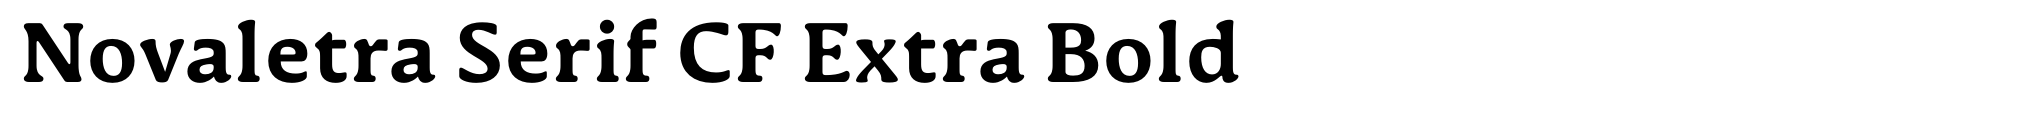 Novaletra Serif CF Extra Bold image